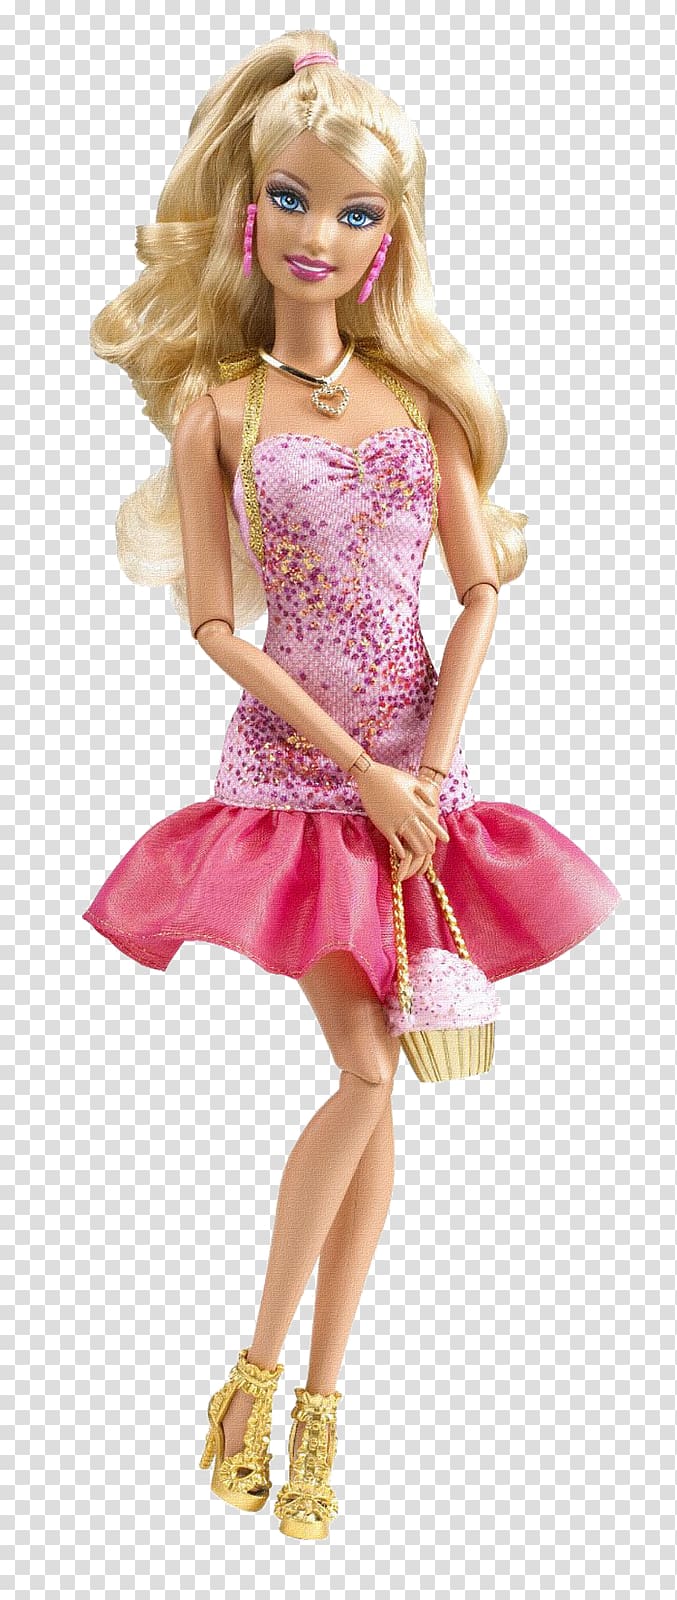 Amazon.com Ken Doll Barbie Toy, doll transparent background PNG clipart